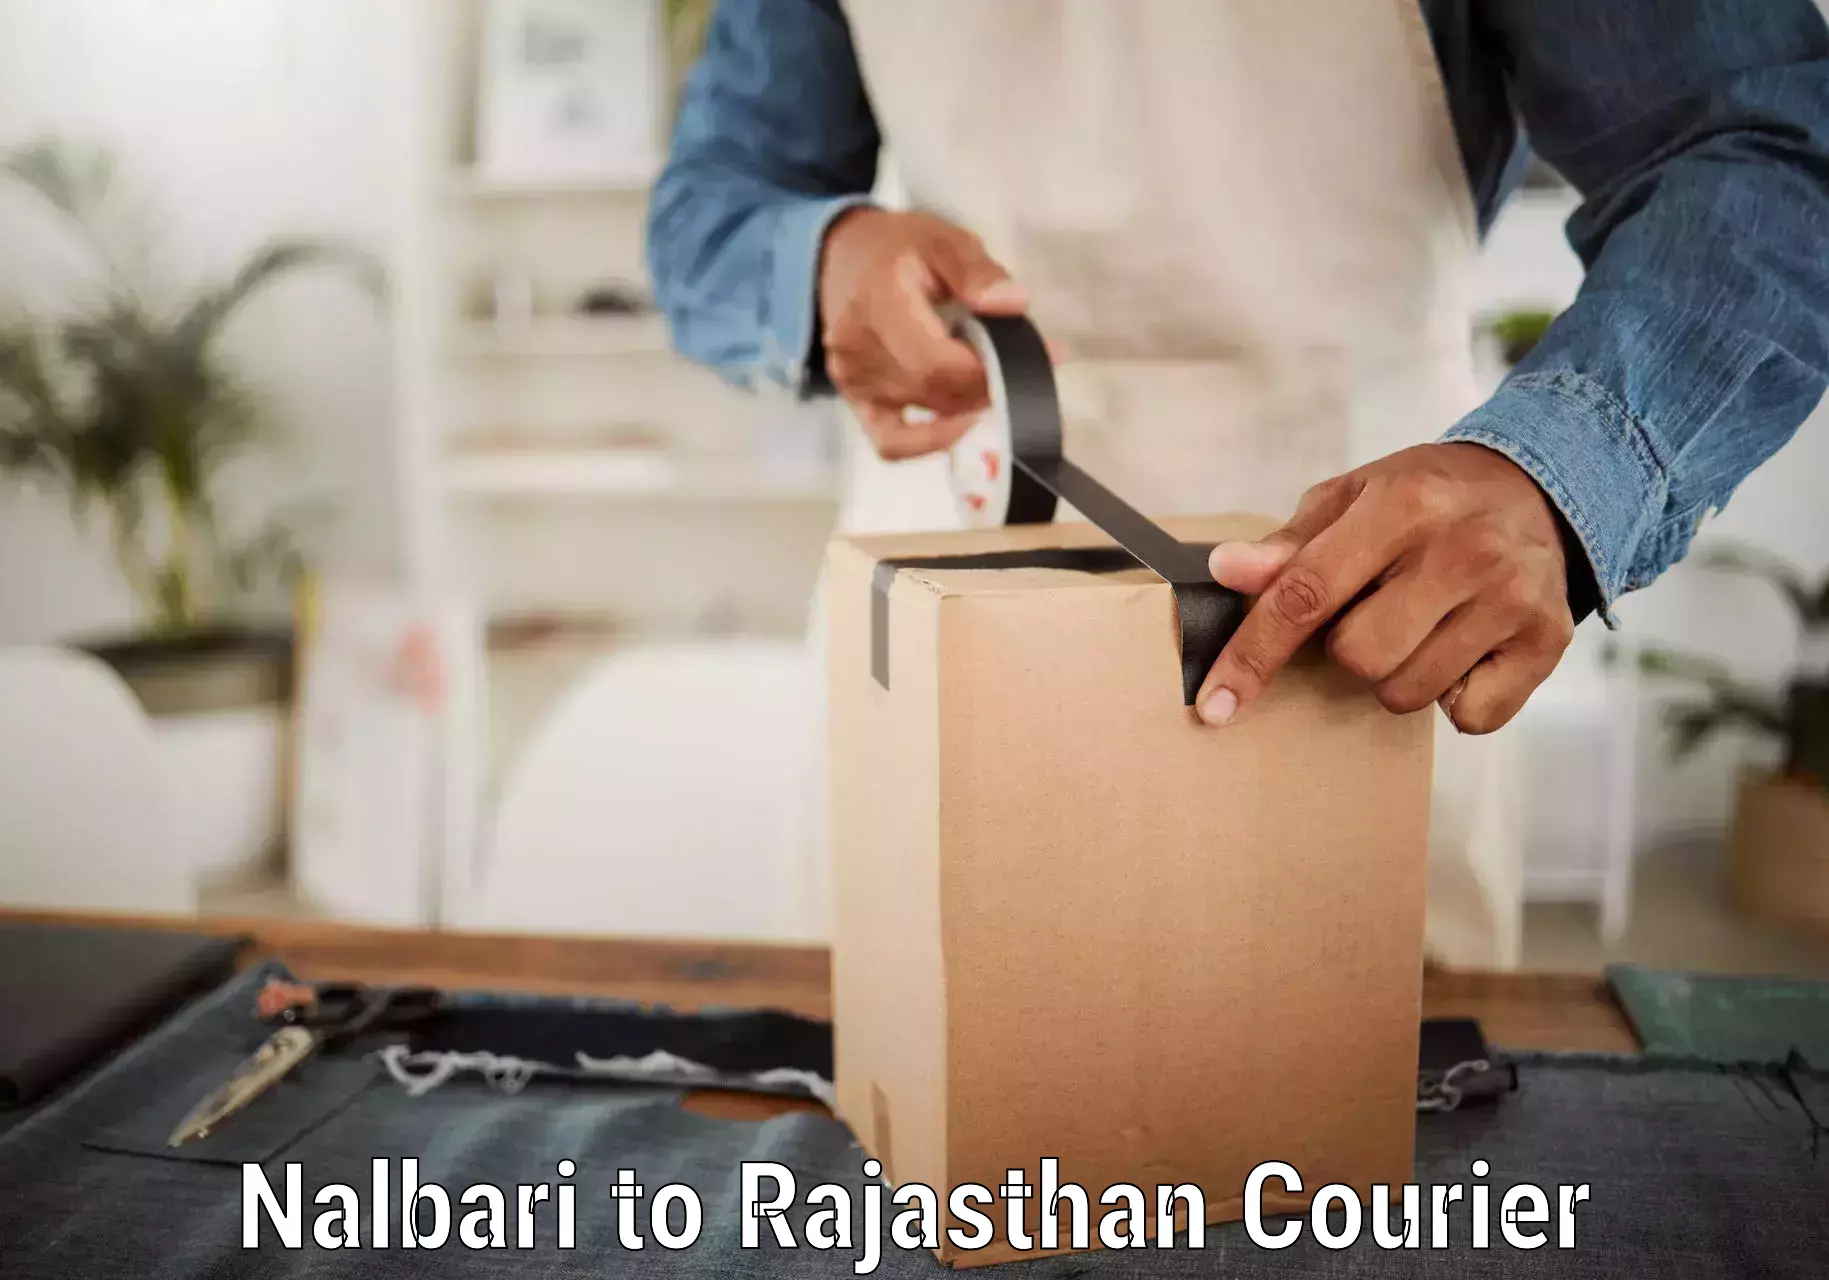 Nationwide delivery network Nalbari to Nagar